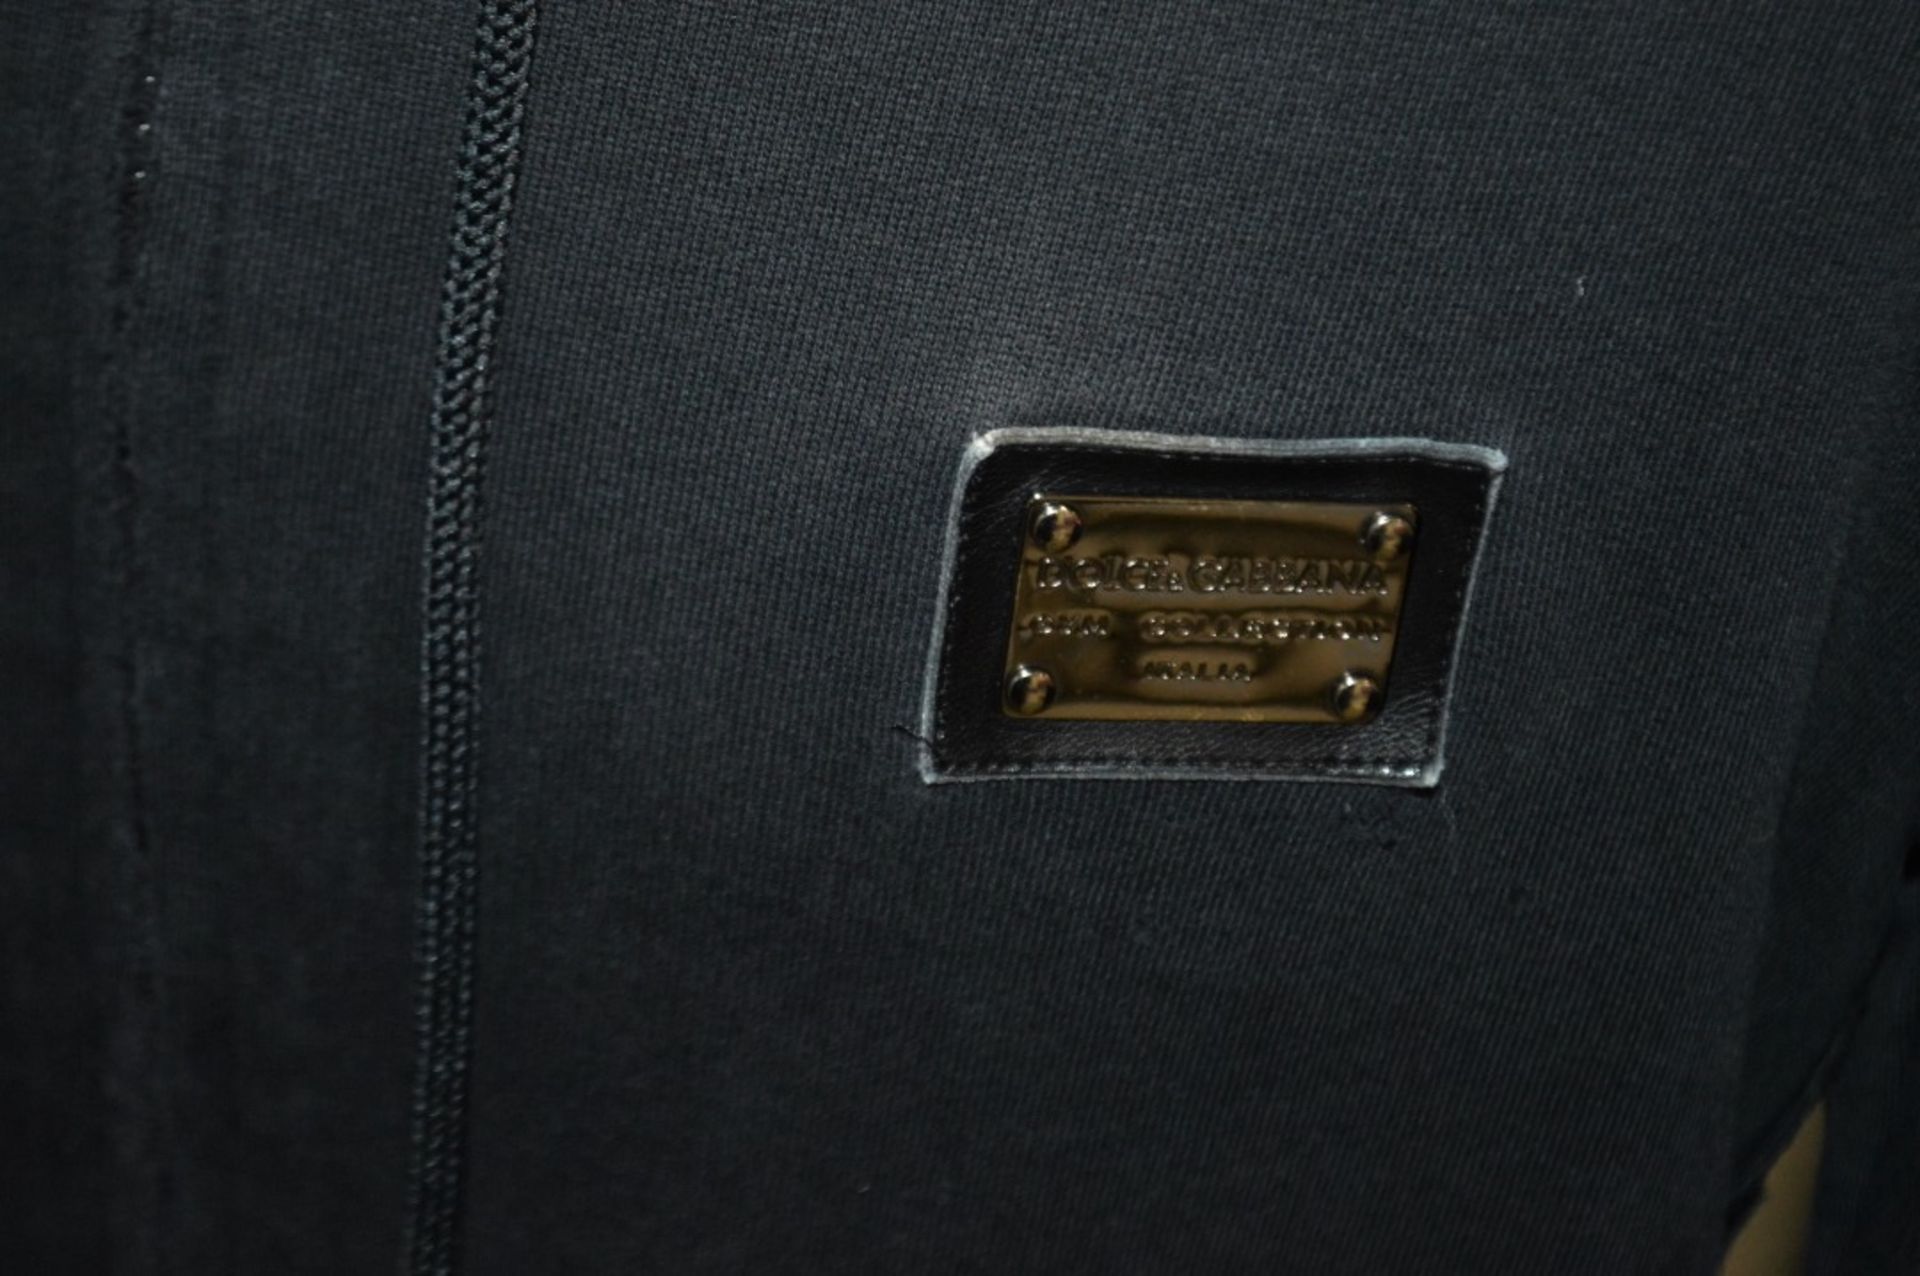 1 x Men's Genuine Dolce & Gabbana Zip Hoodie In Black - Size: 46 - Preowned In Very Good - Image 8 of 9